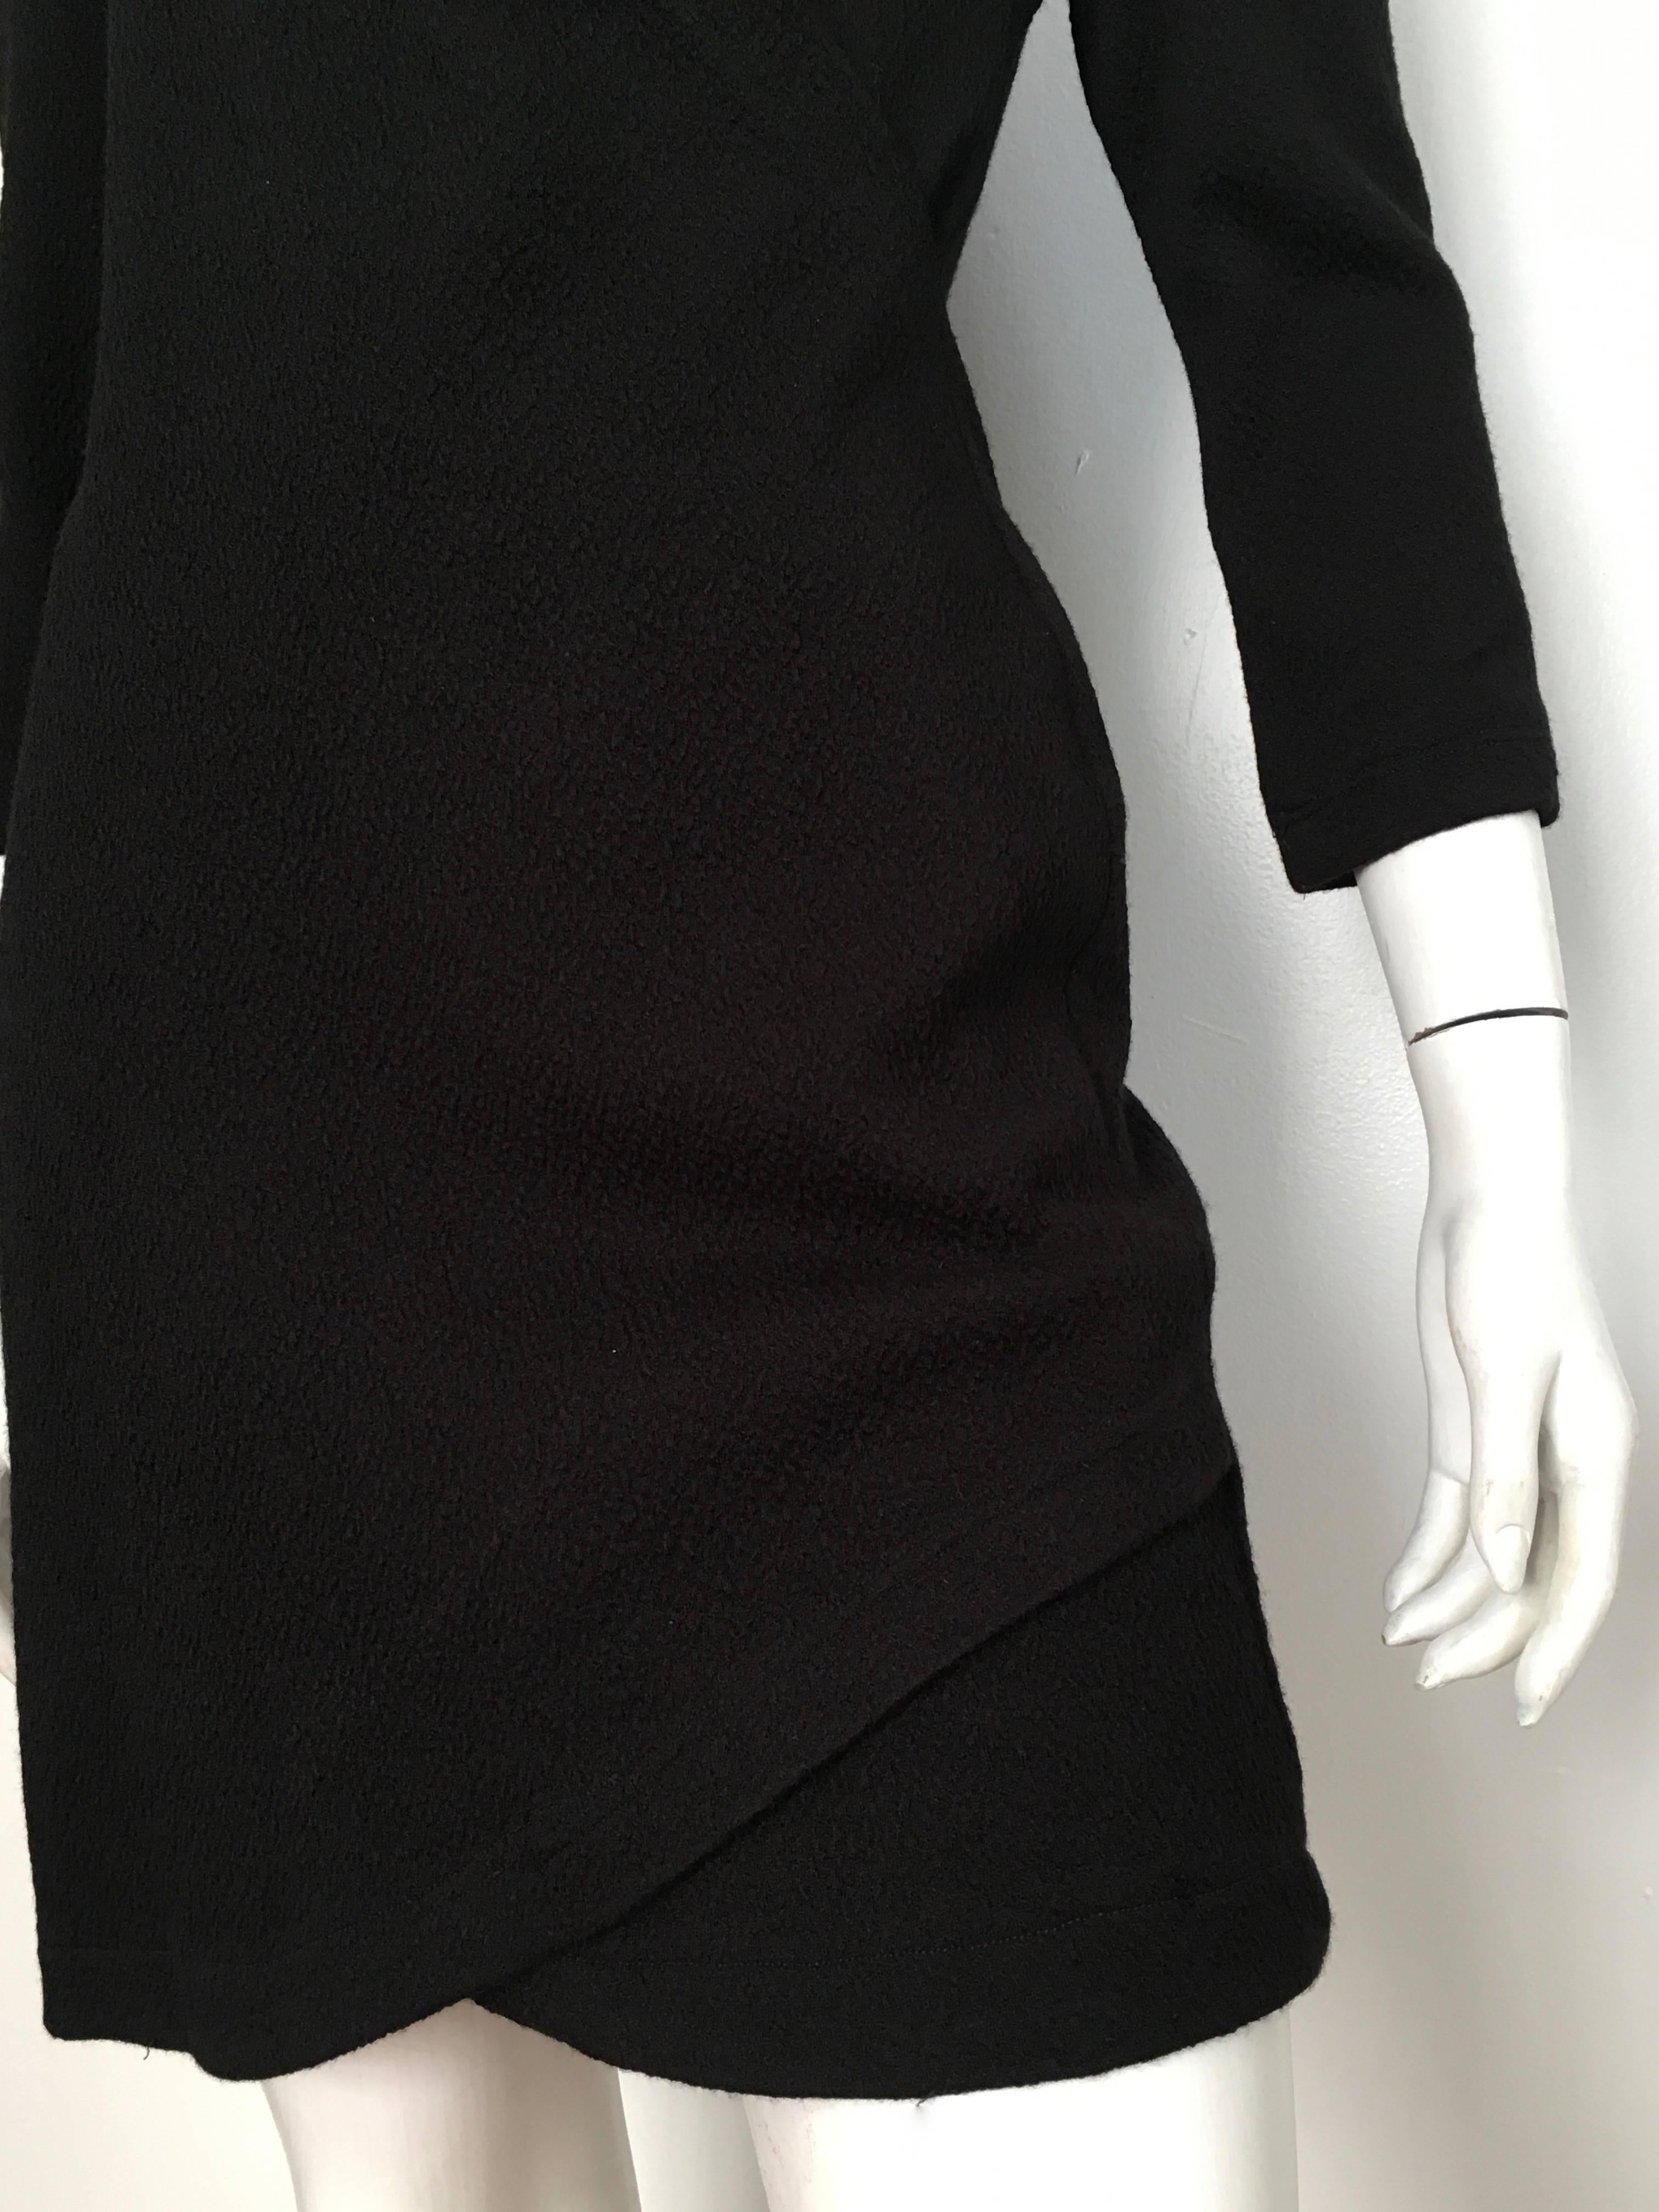 Women's or Men's Patrick Kelly 1980s Black Cocktail Dress Size 6 / 8.  For Sale